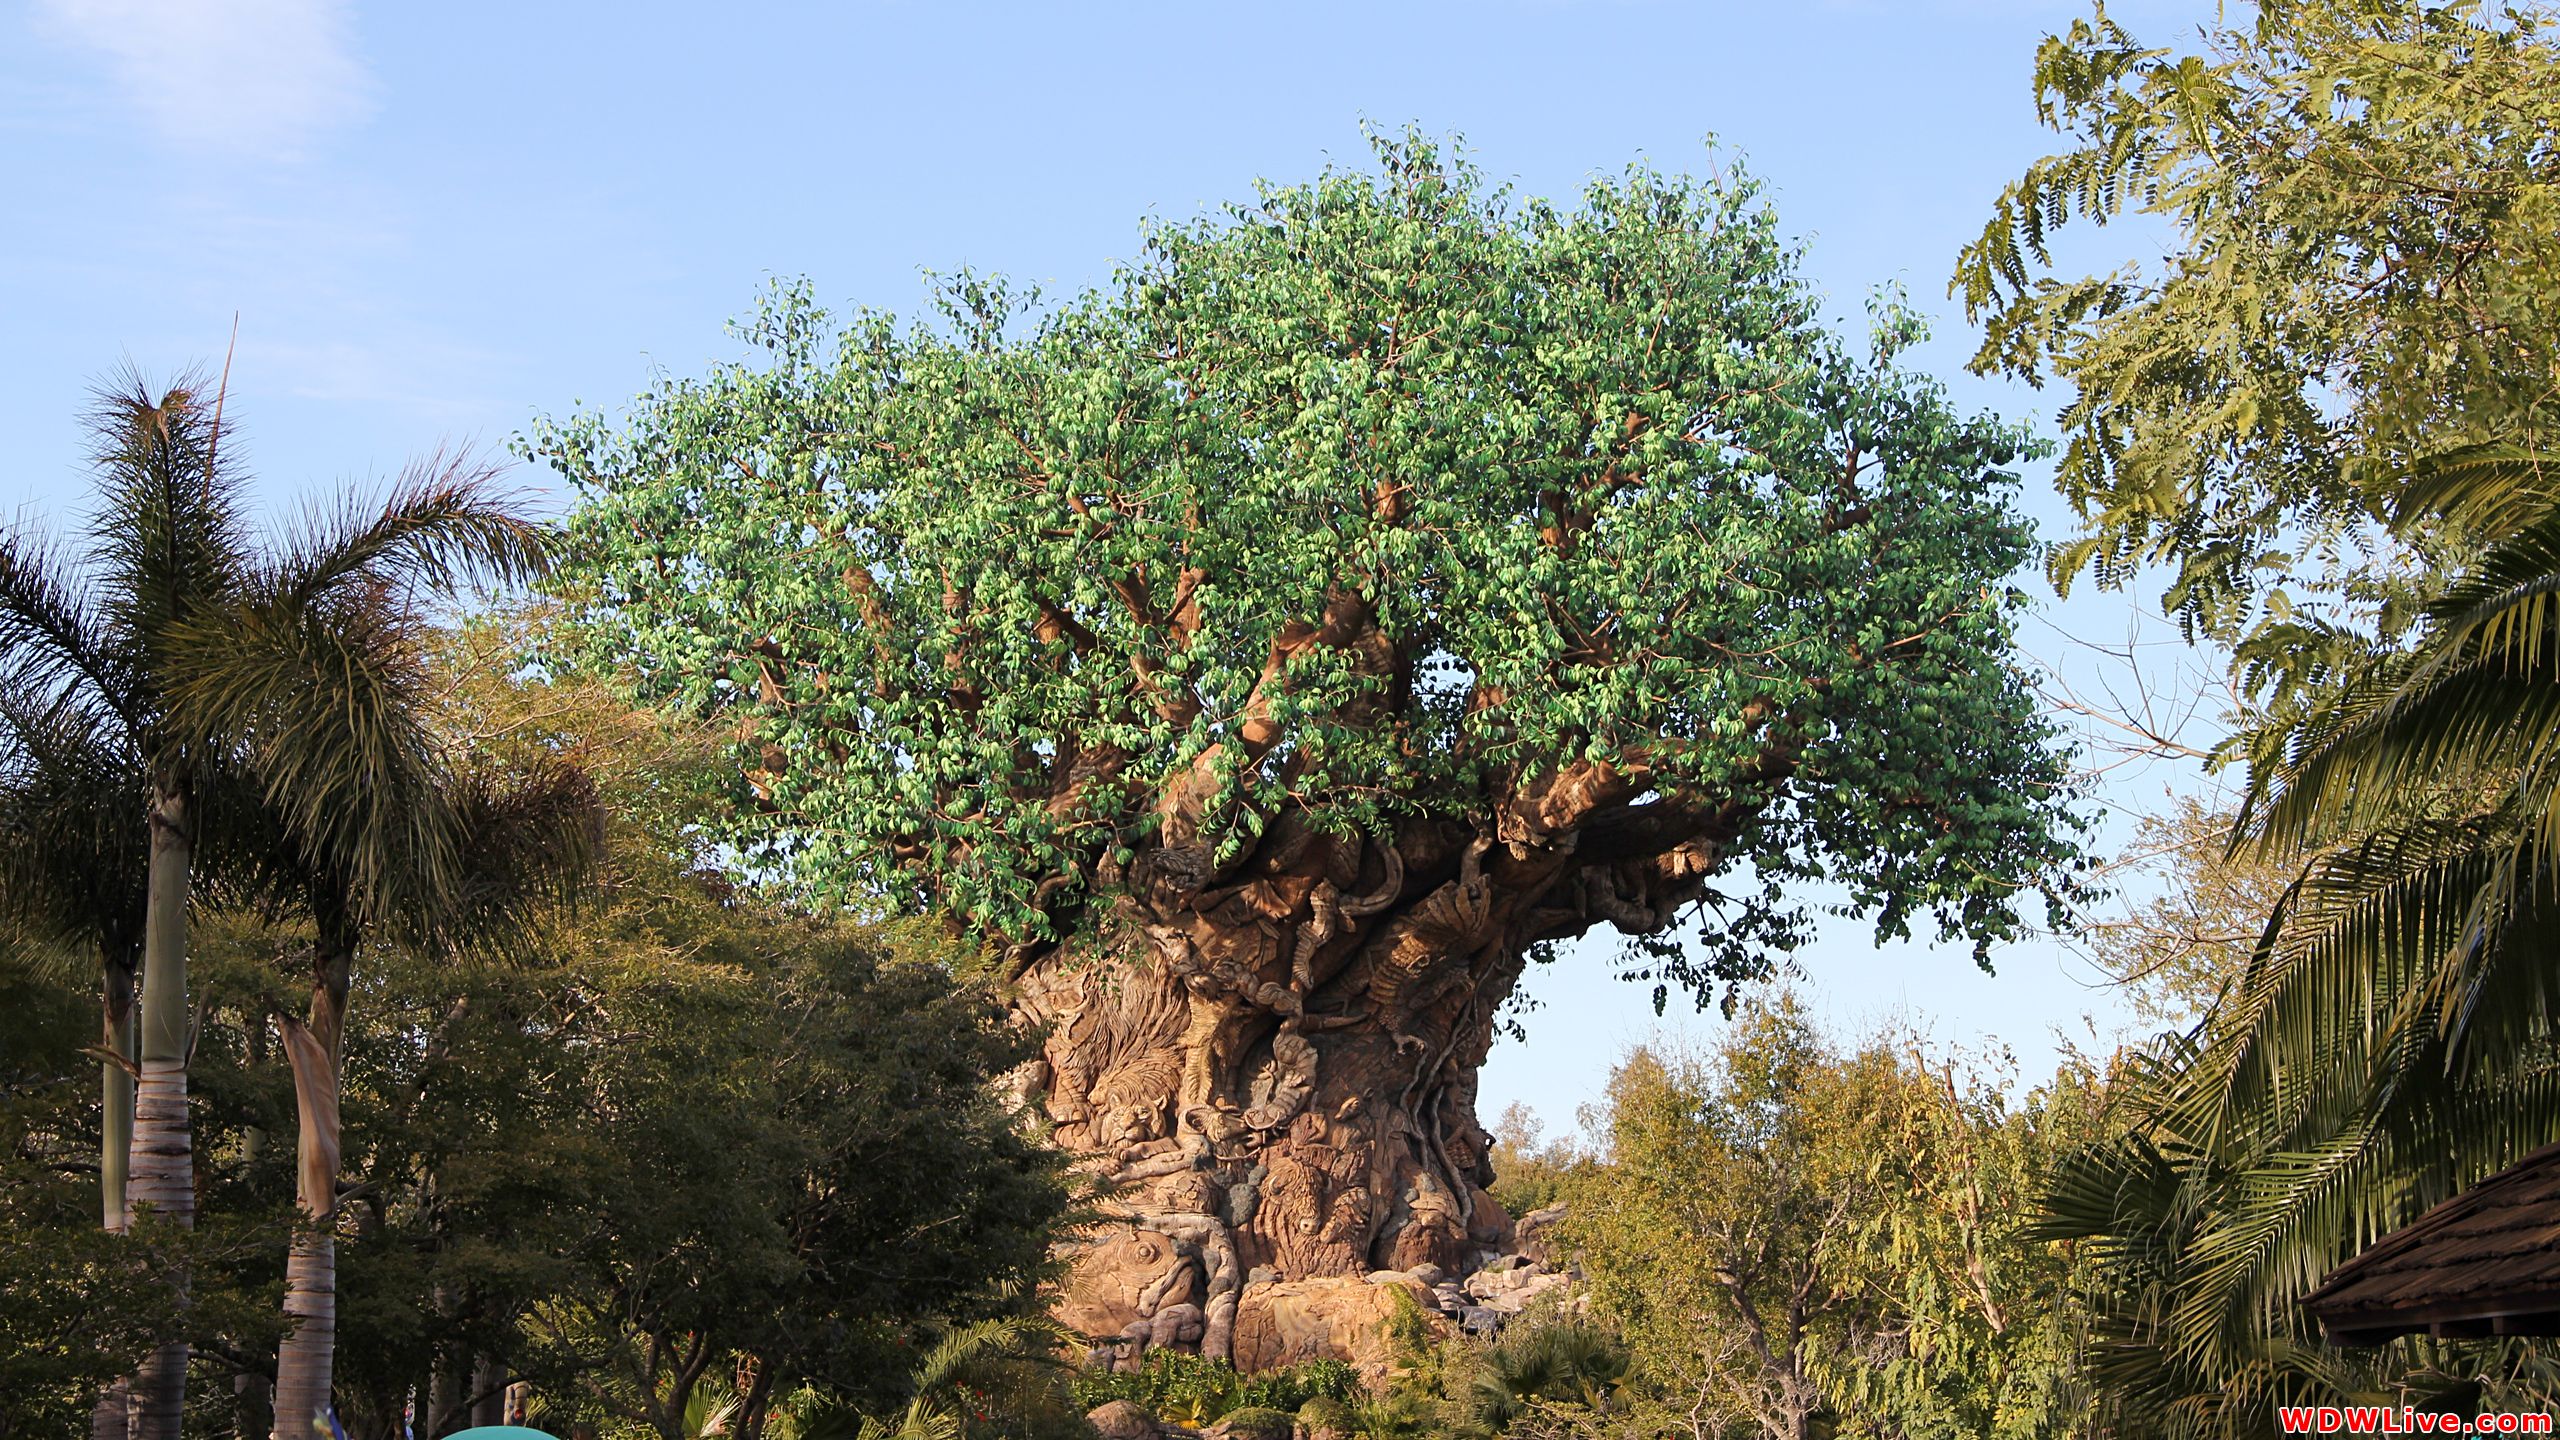 Tree Of Life: The Majestic 145 Foot Tall Animal Kingdom Centerpiece